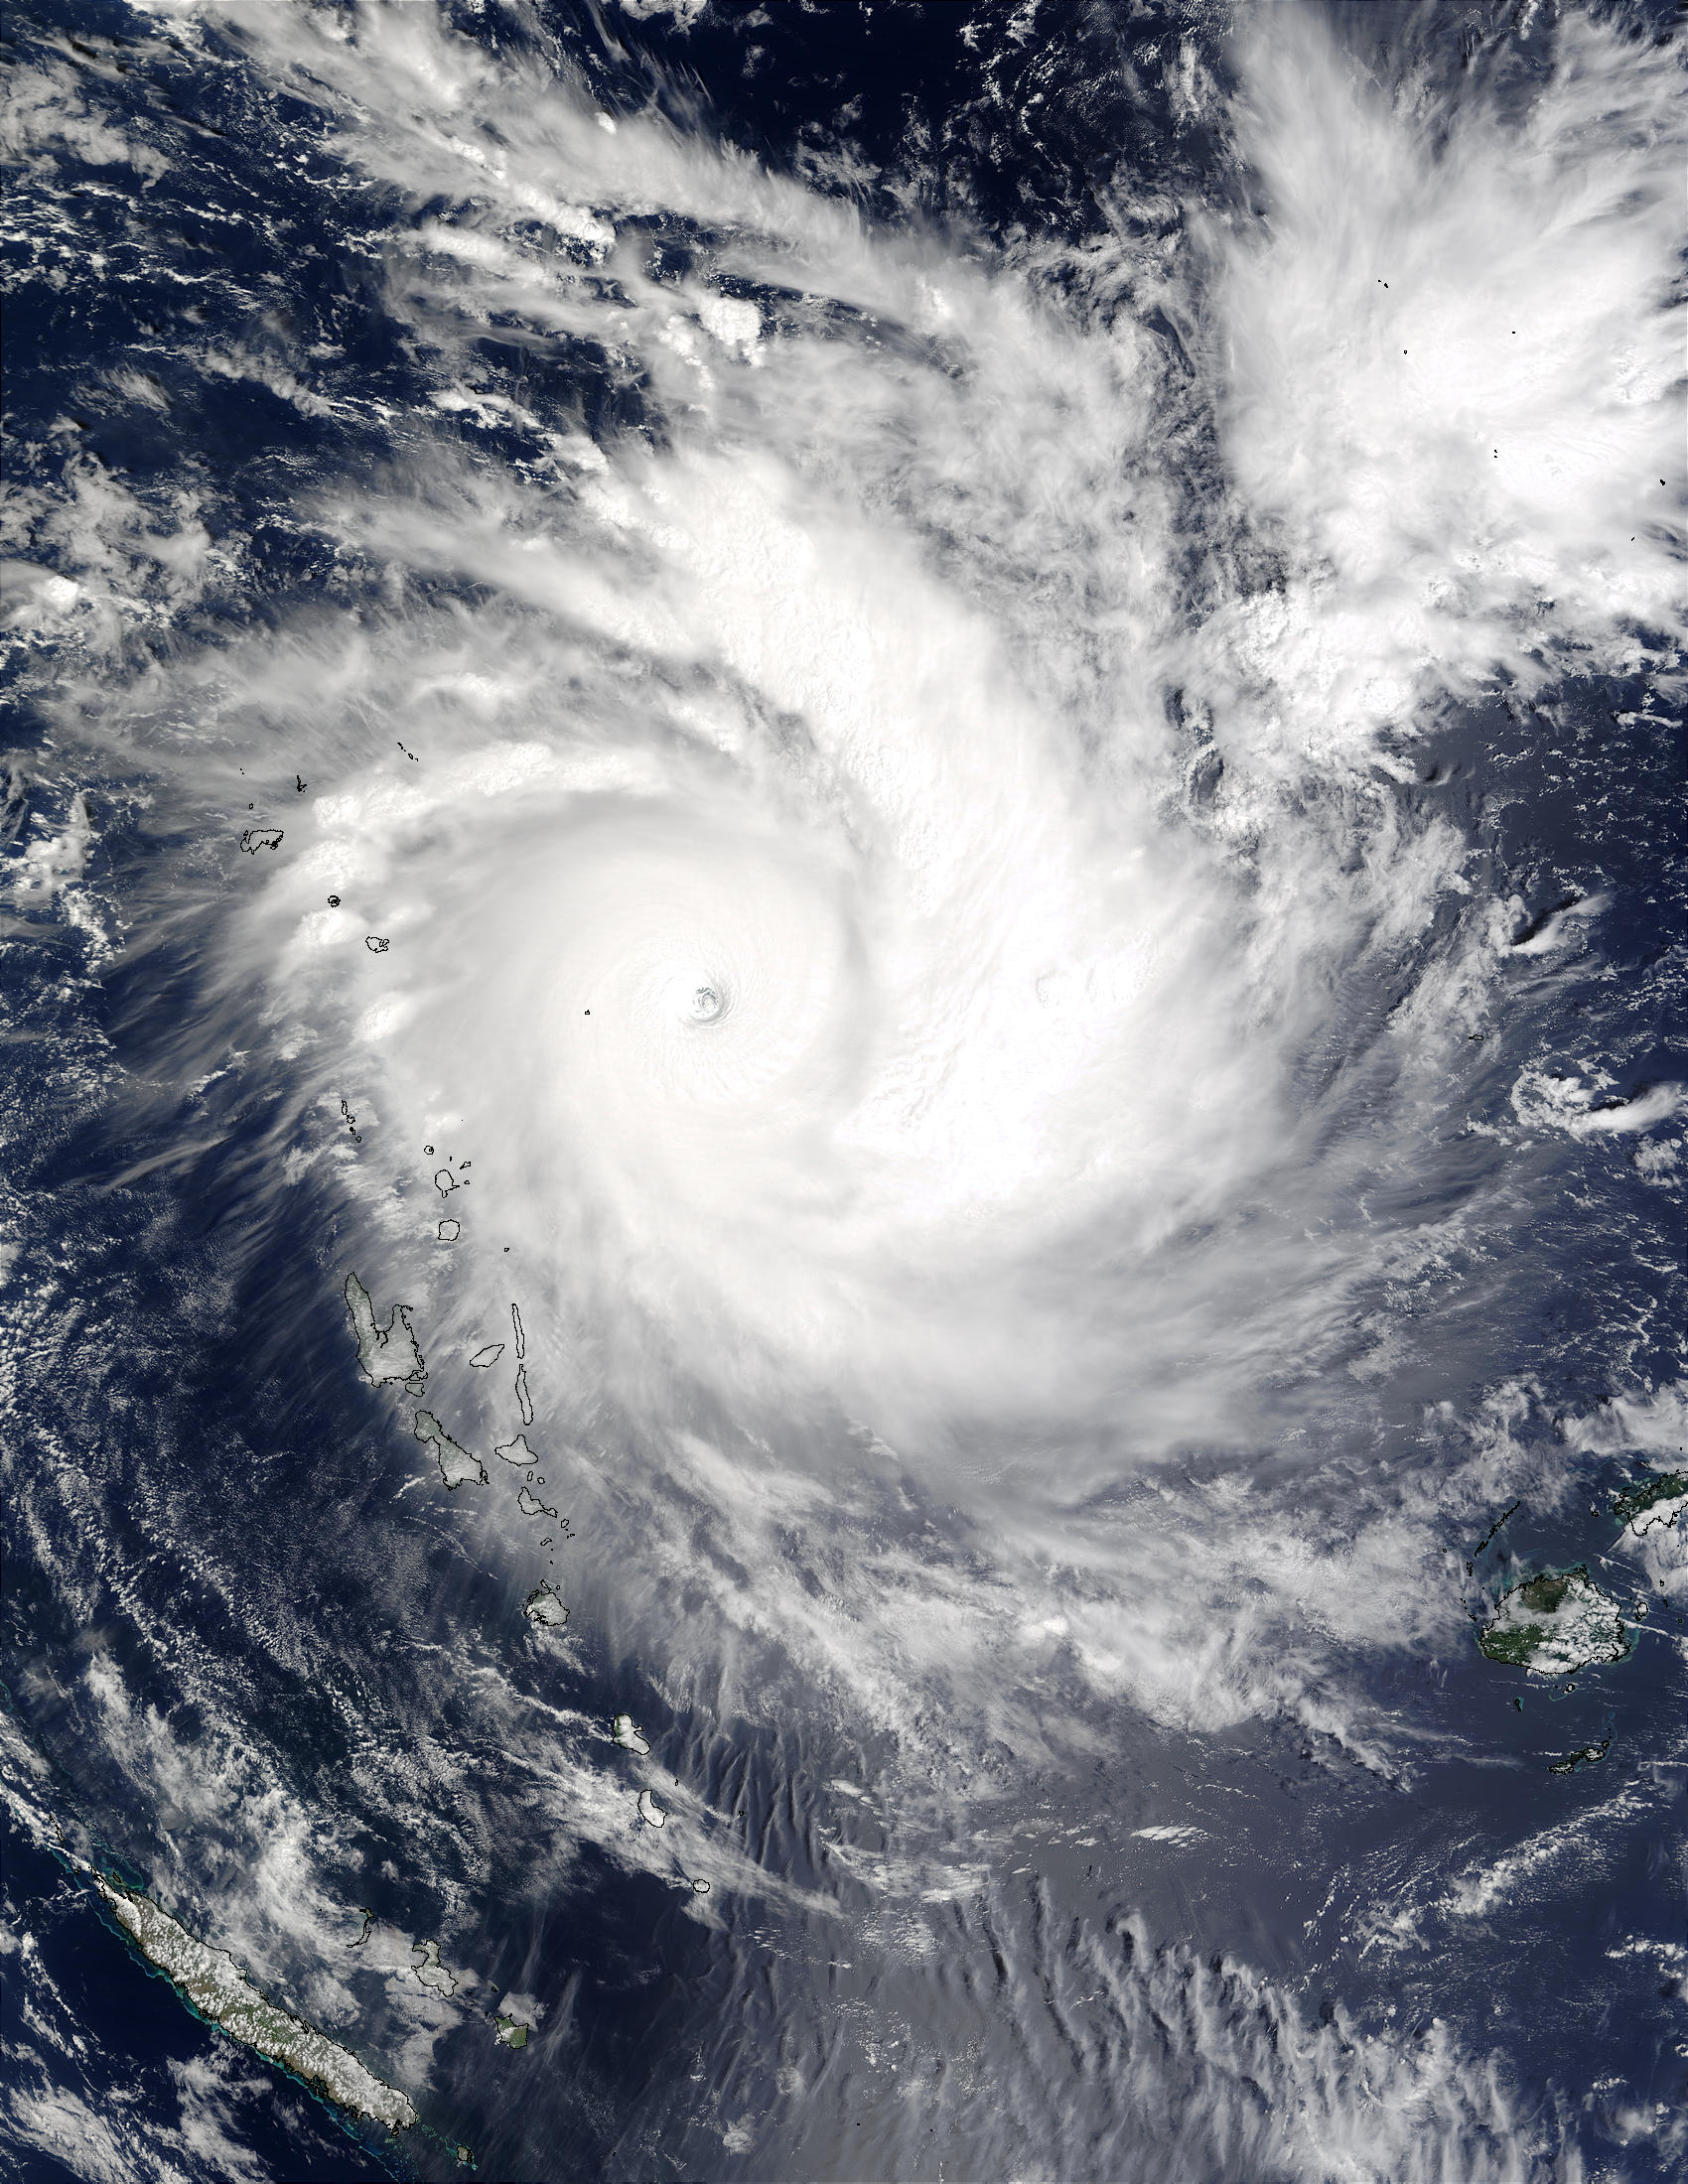 Tropical Cyclone Zoe (06P) northeast of Vanuatu, South Pacific Ocean - related image preview